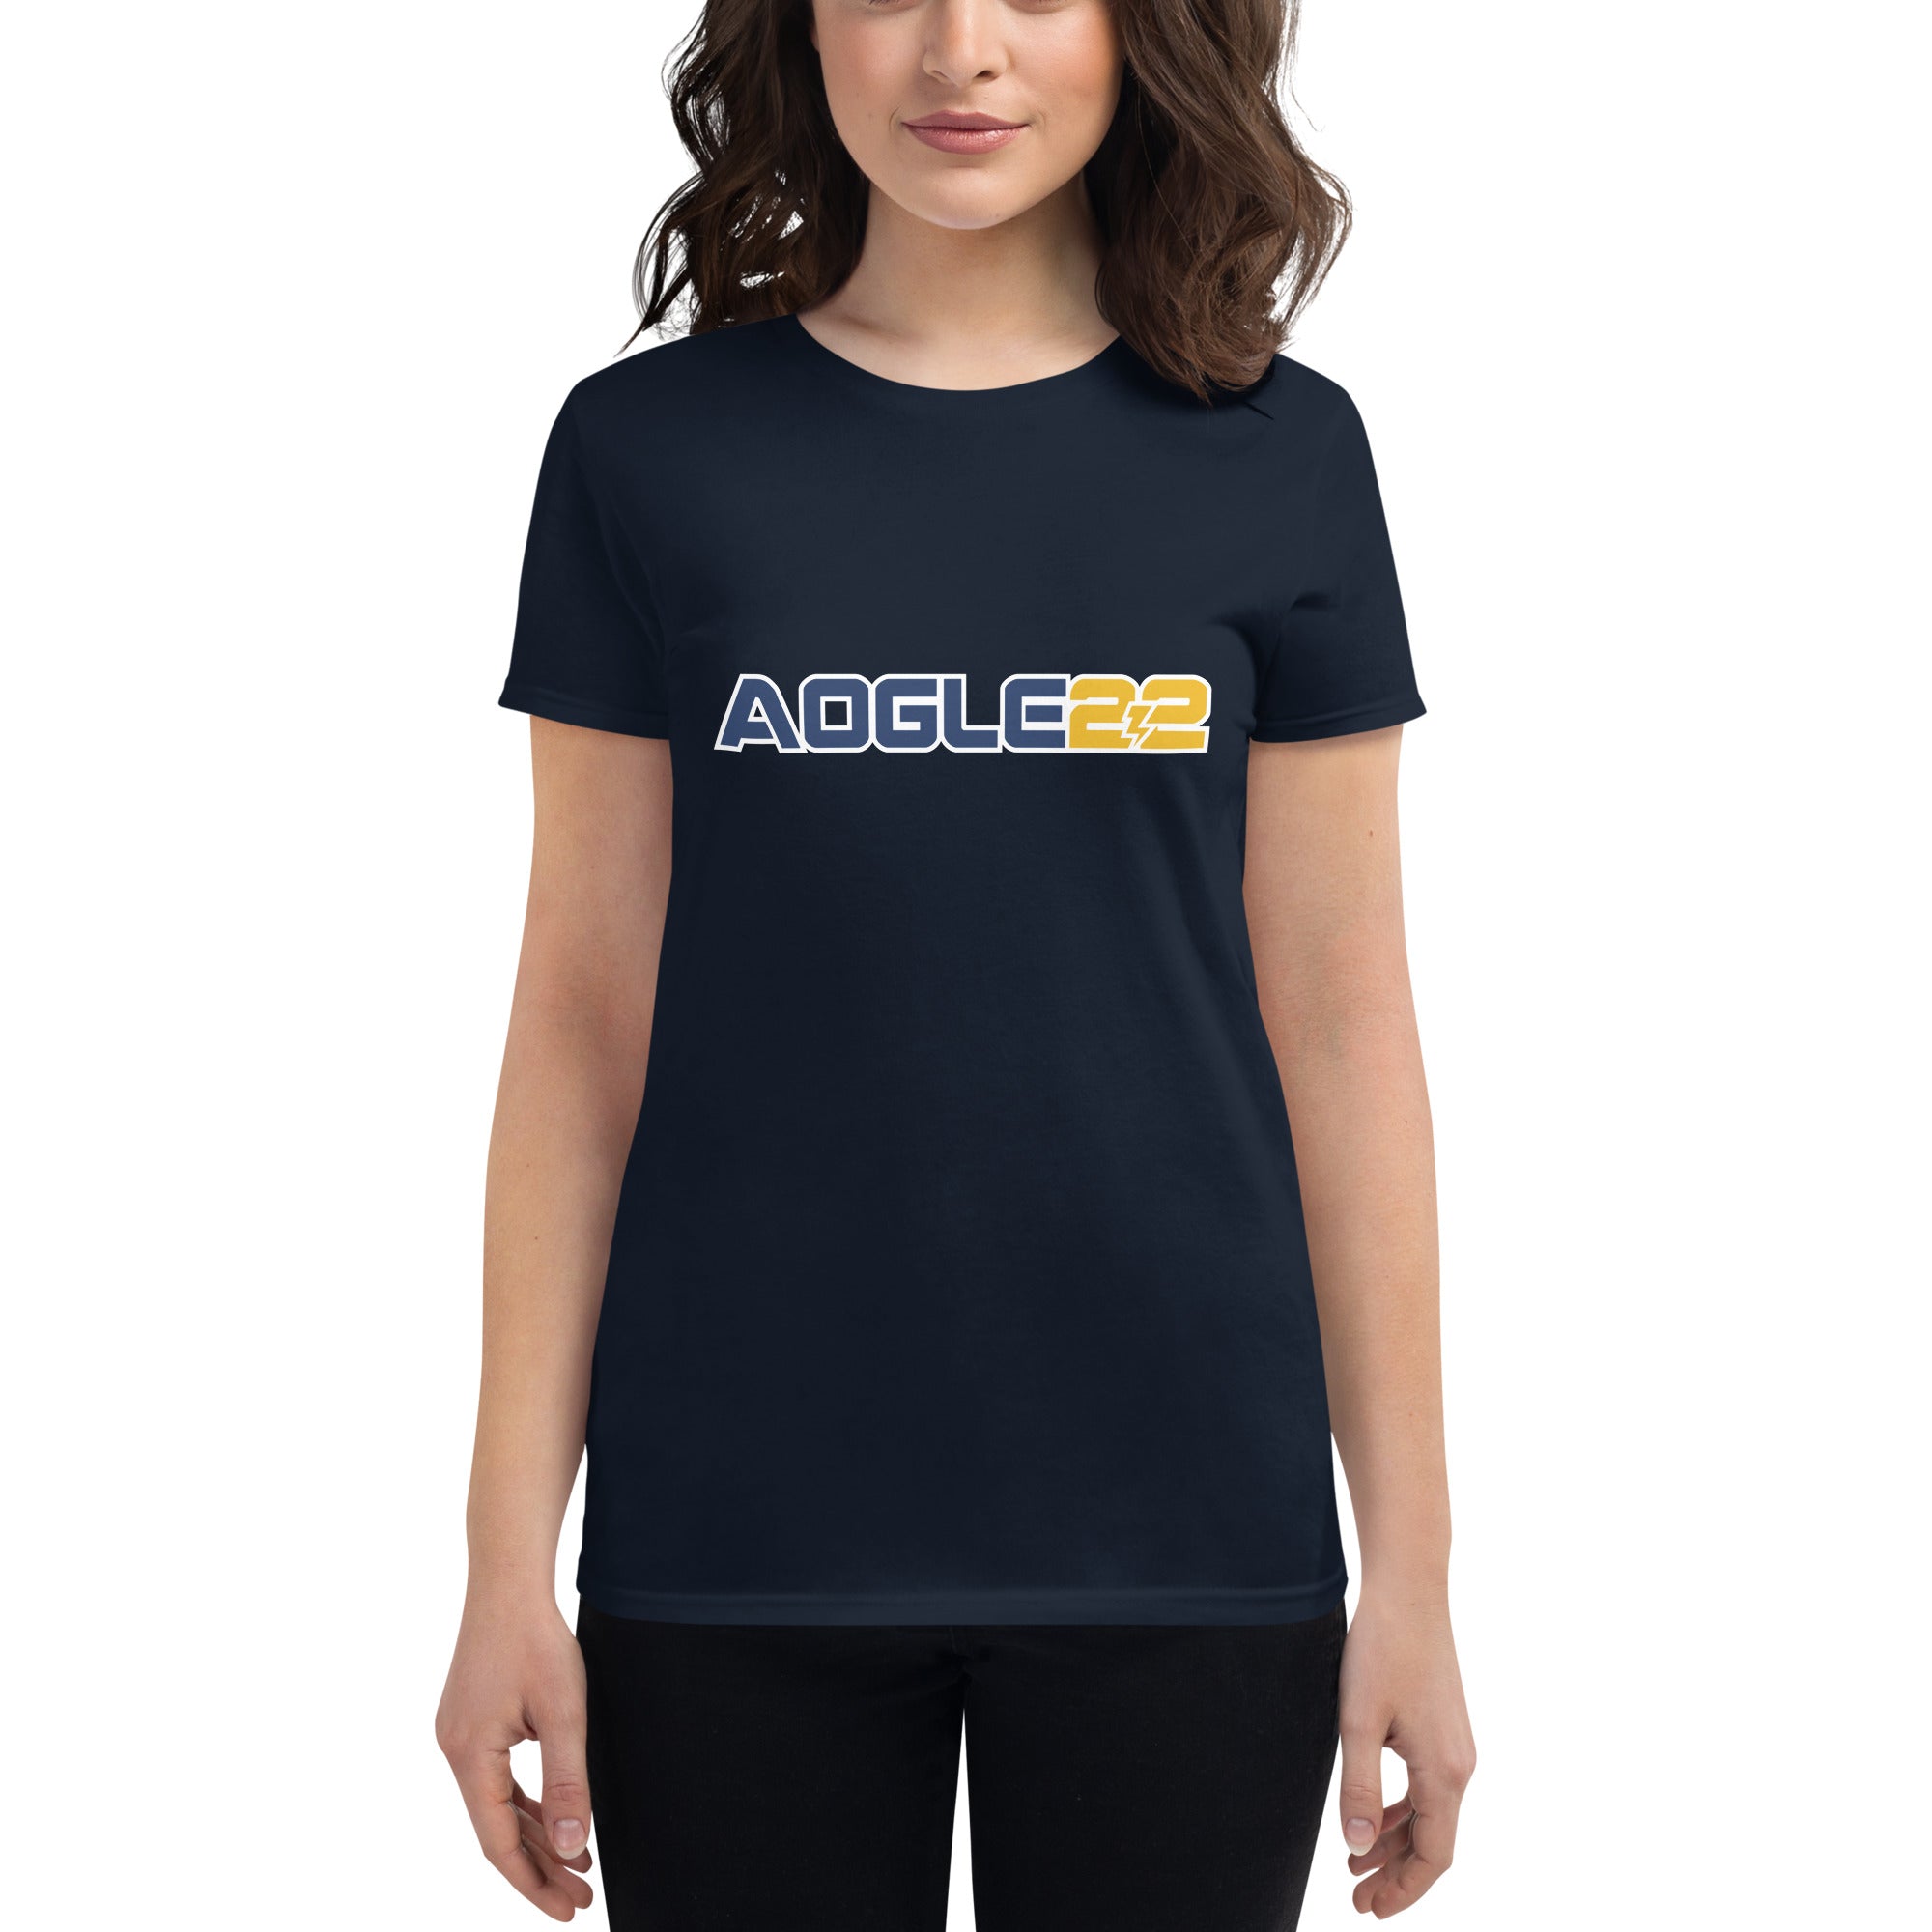 Abby Ogle AOGLE22 Women's short sleeve t-shirt